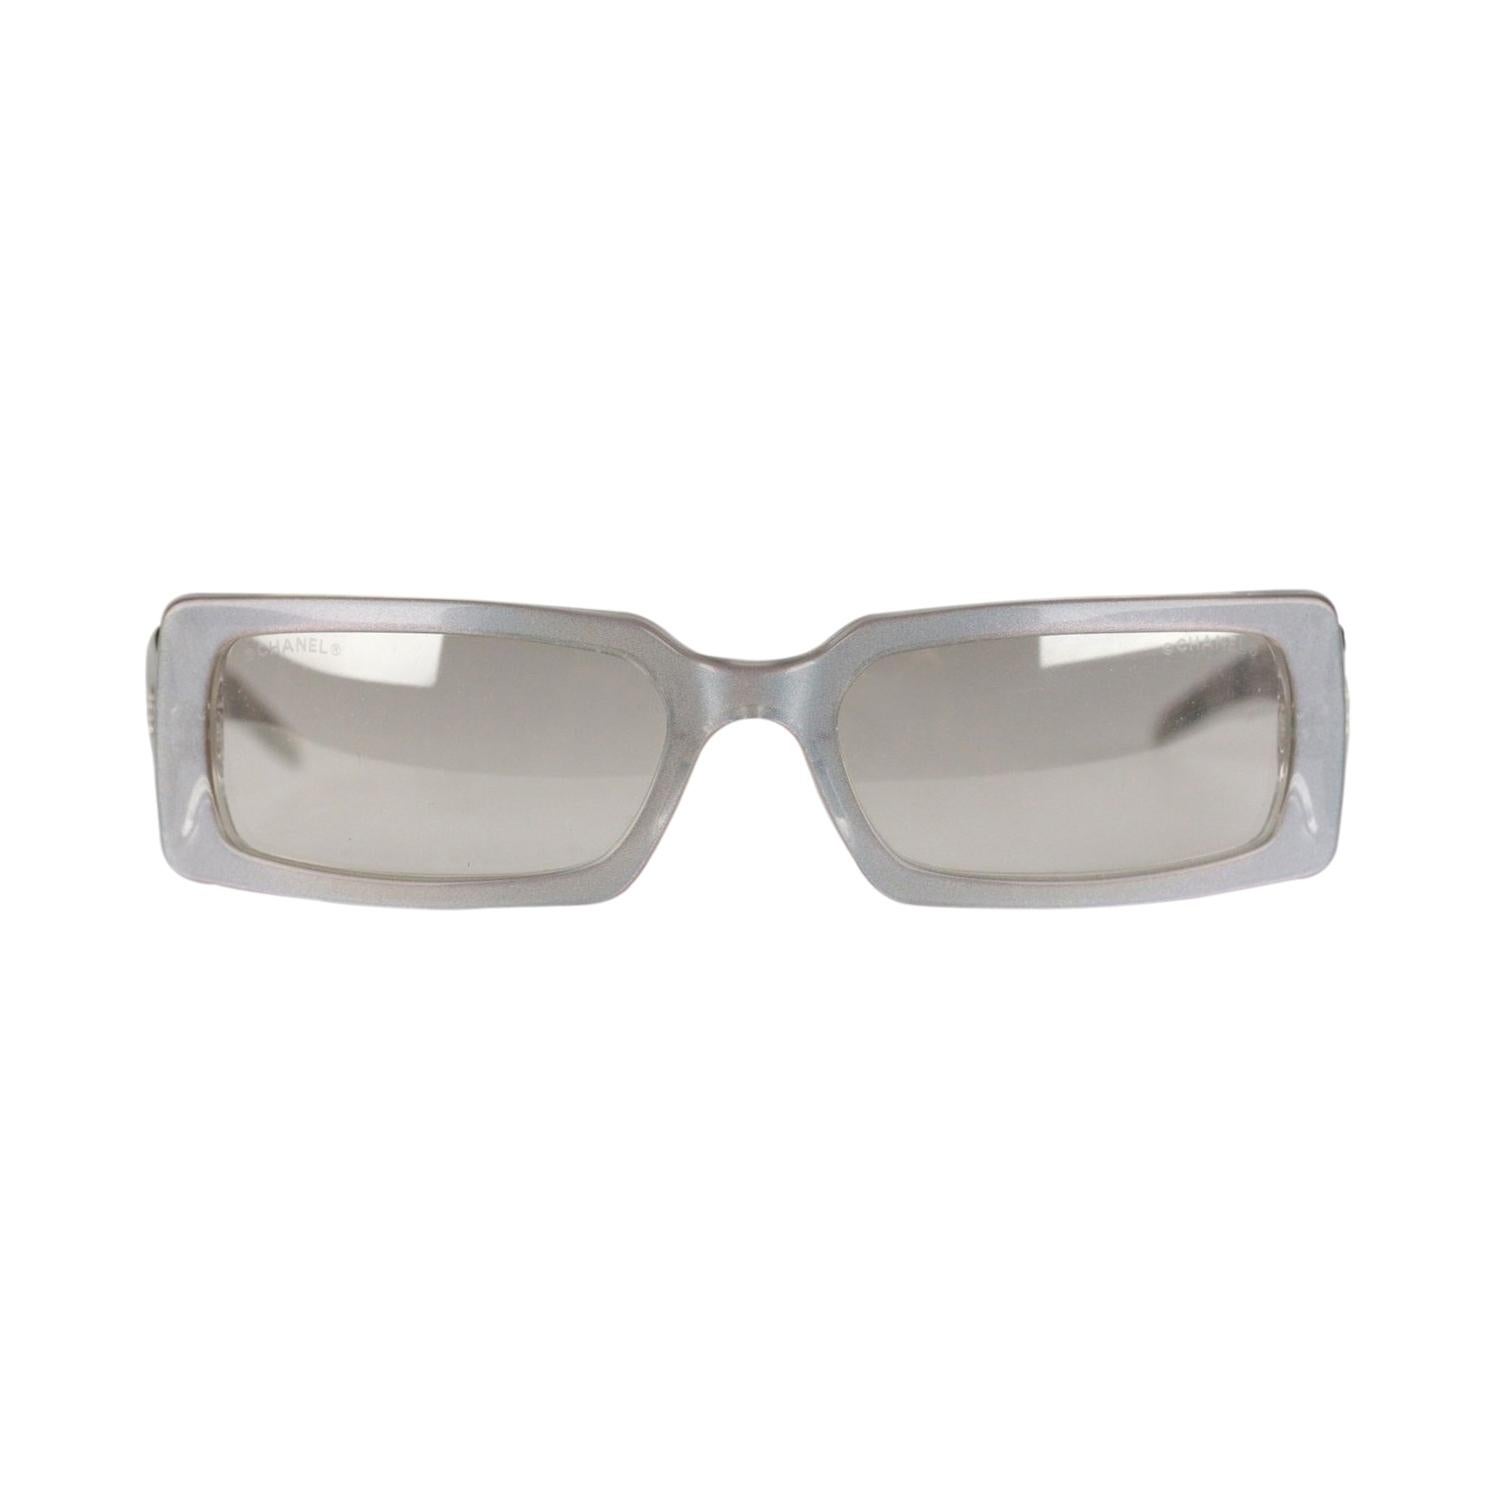 Chanel Chanel Brown Gradient Tint CC Logo Sunglasses-5065